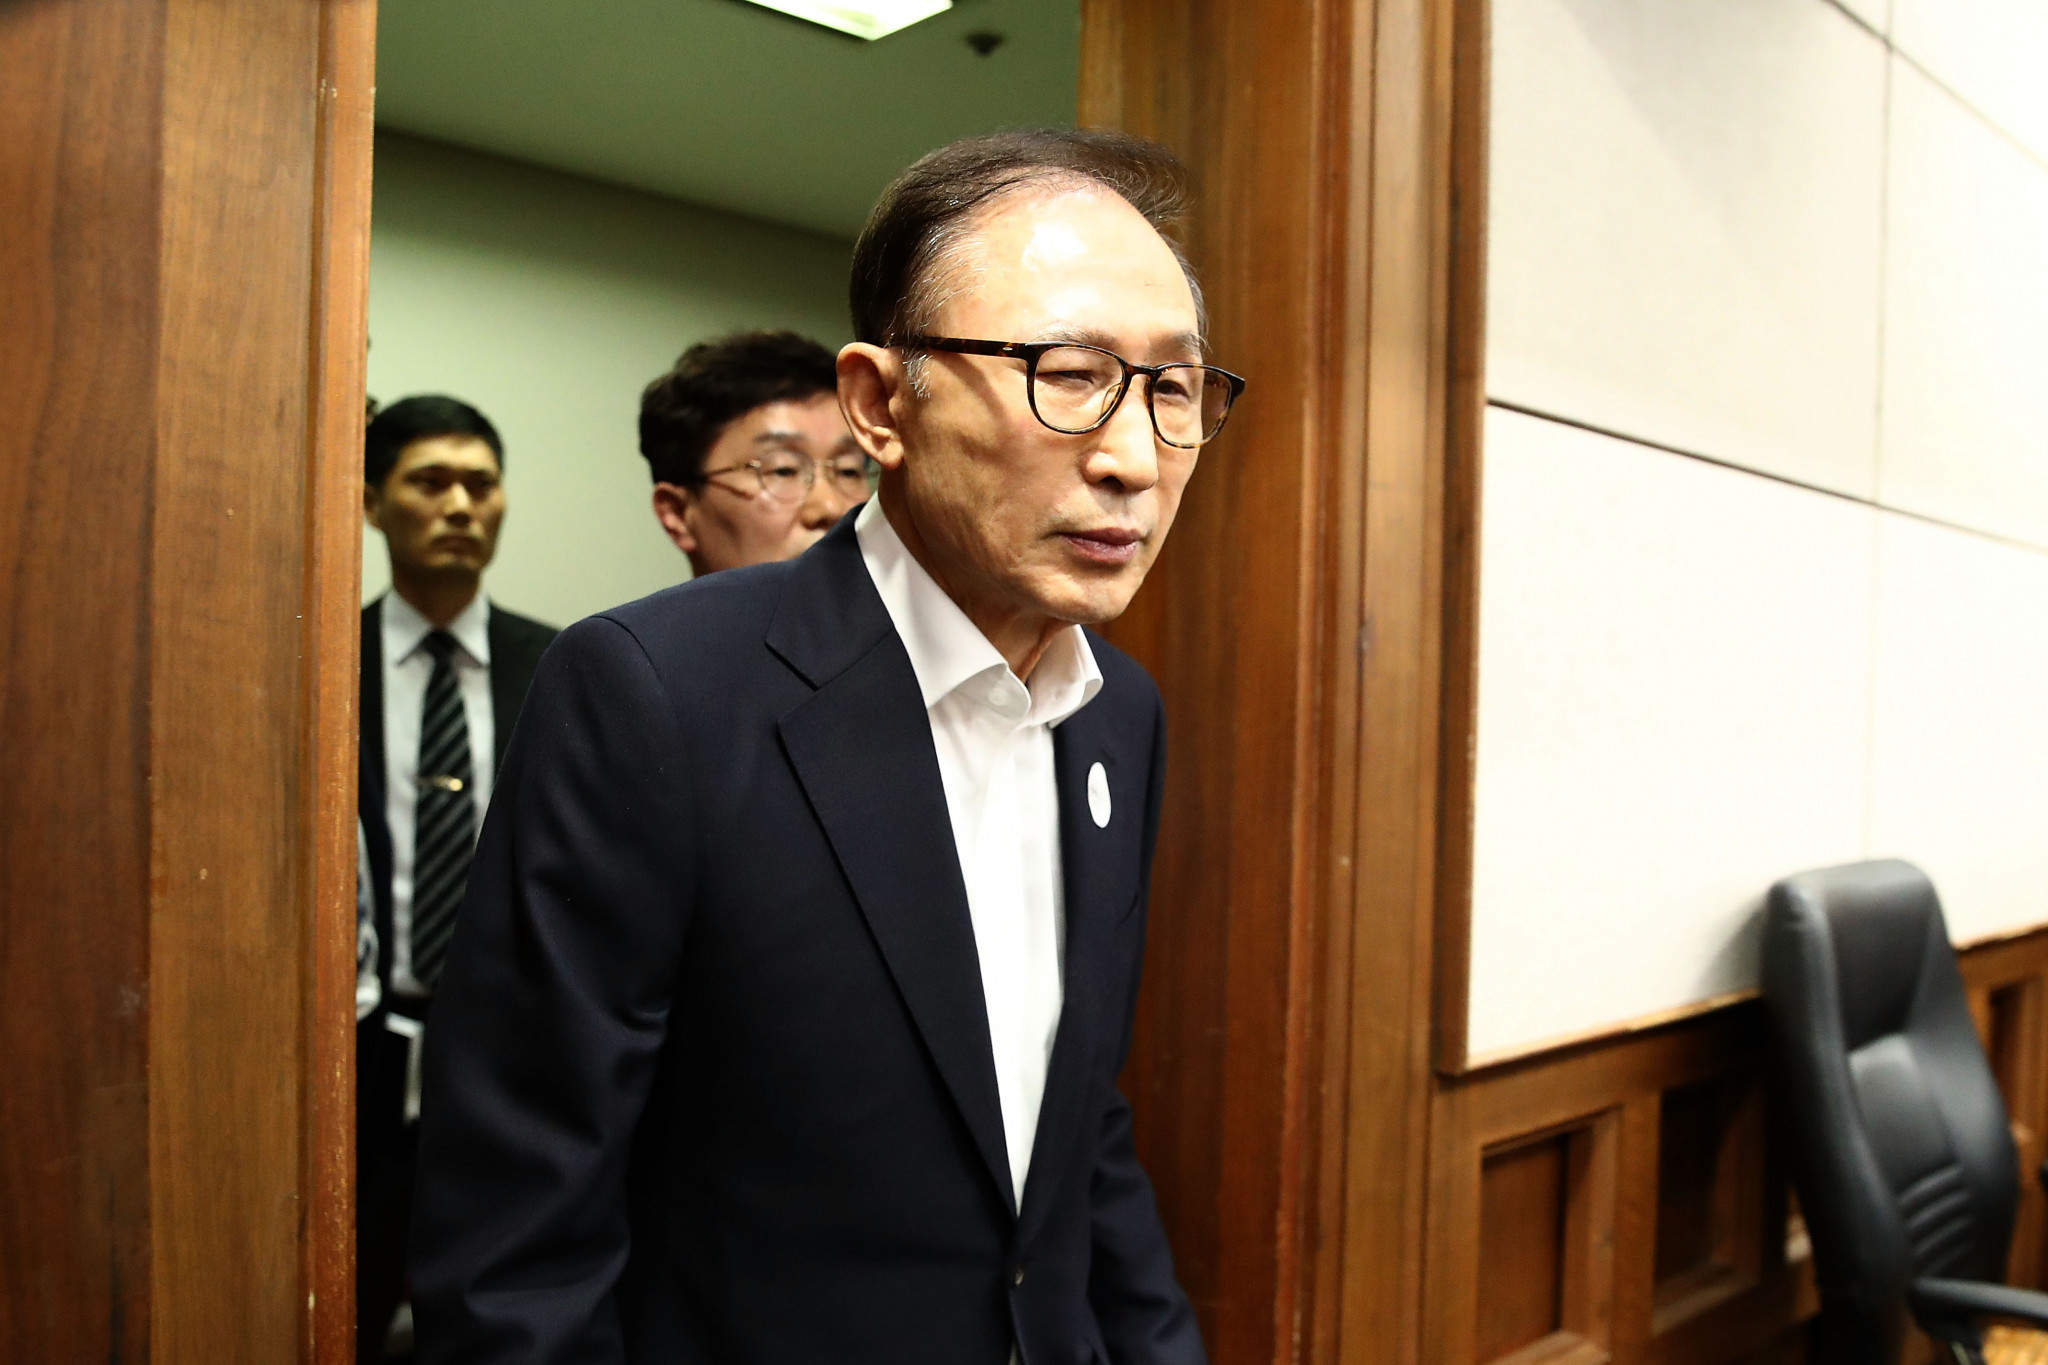 Former South Korean President denies receiving bribes to clear Samsung chairman during Pyeongchang 2018 bid